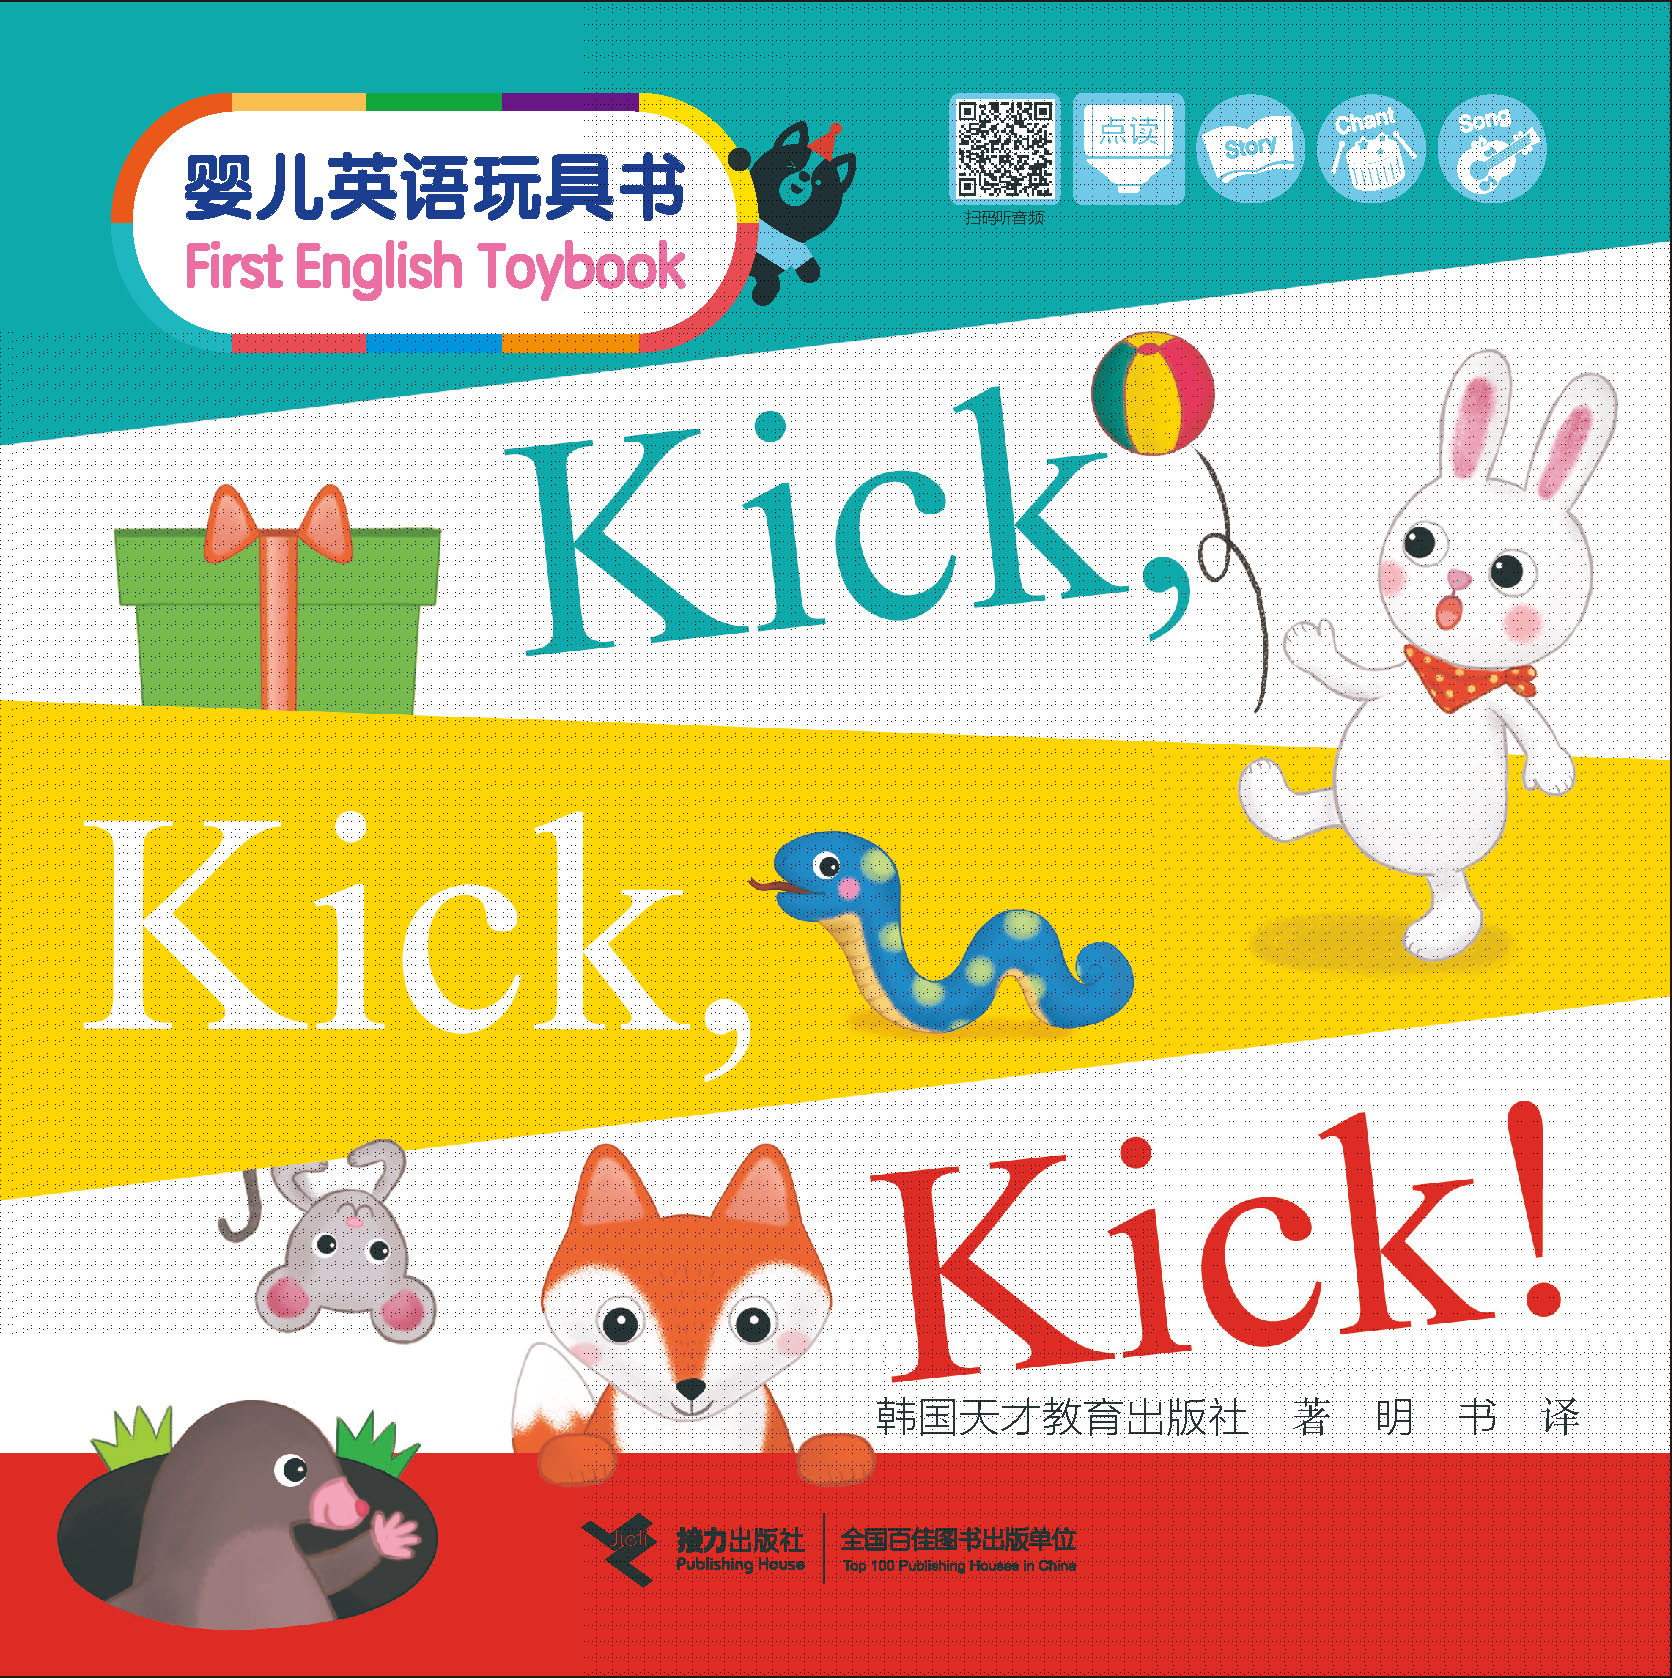 婴儿英语玩具书=First English Toybook.Kick,Kick,Kick！